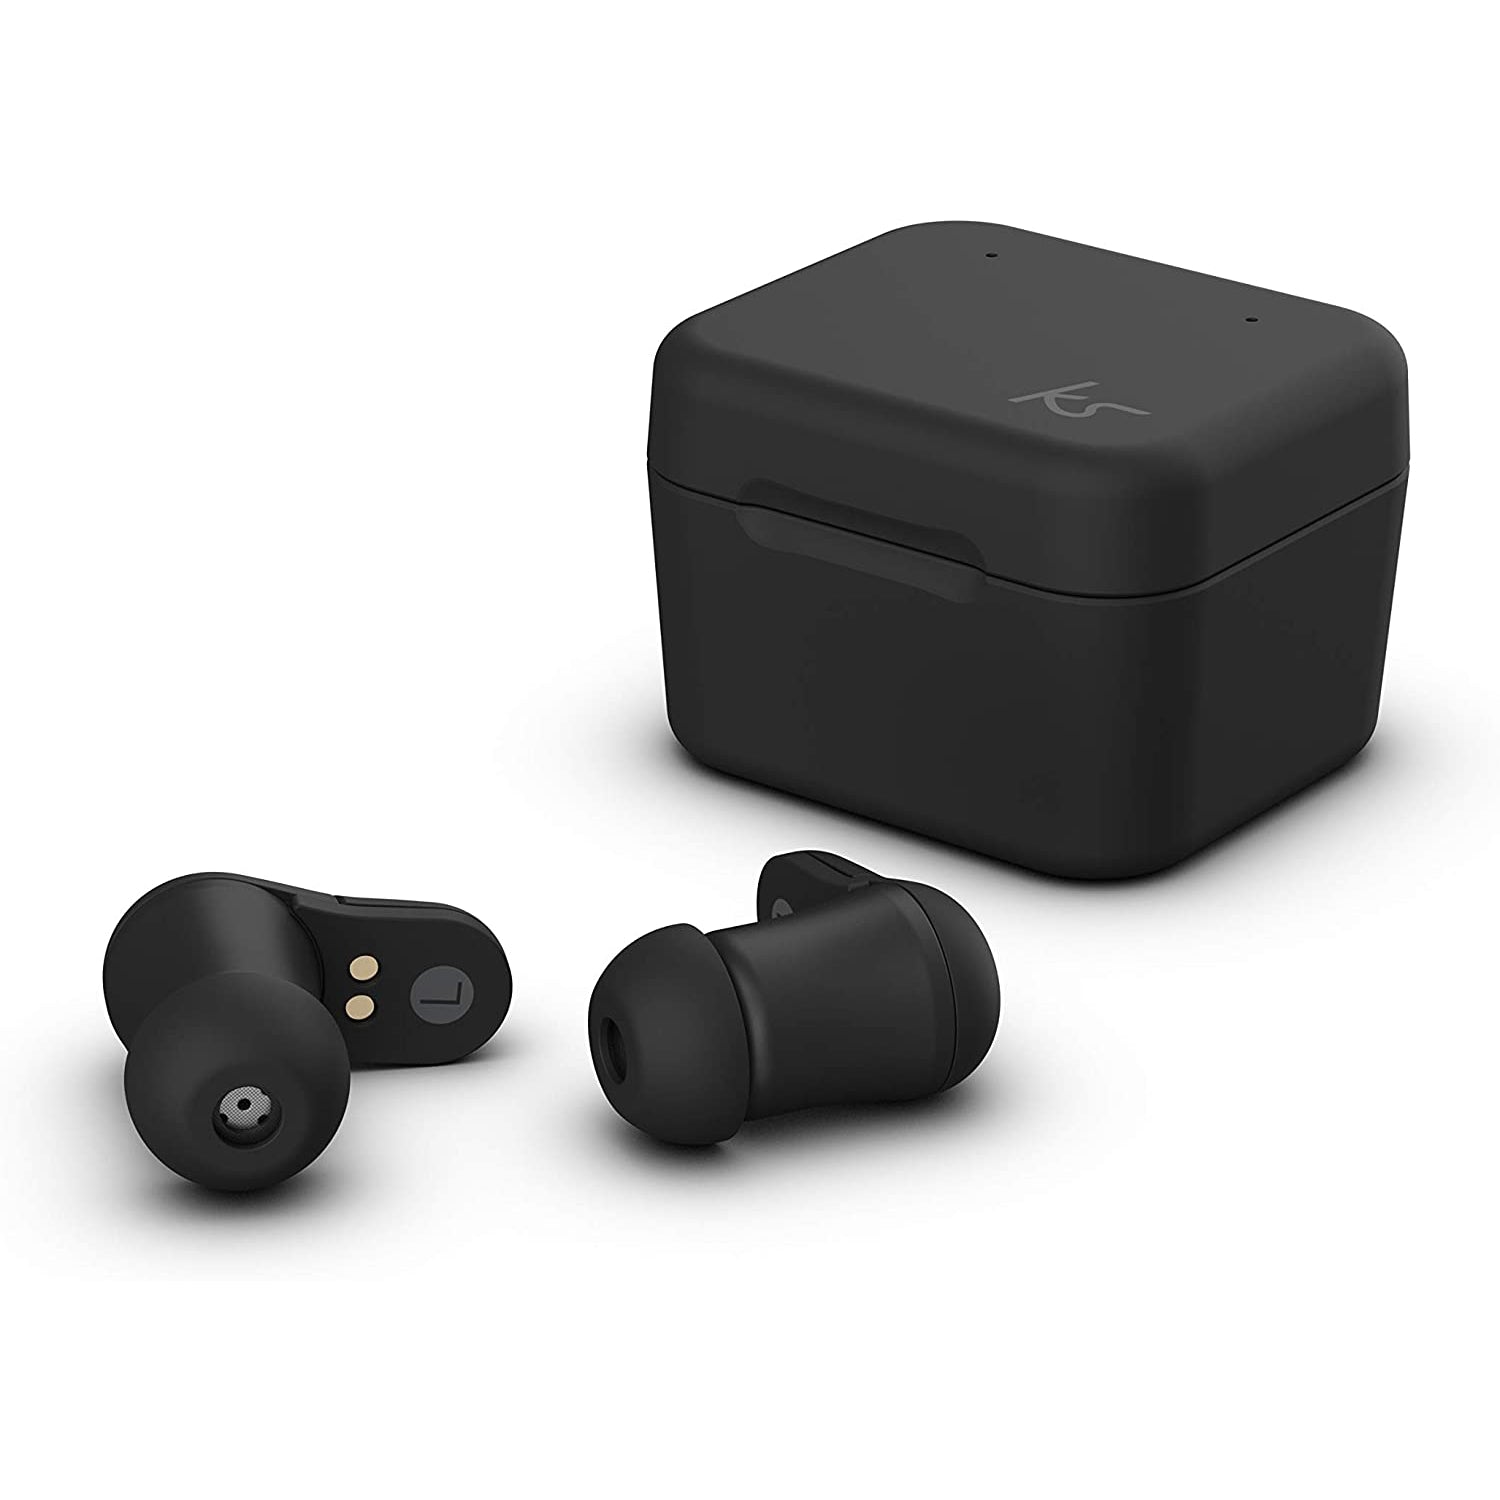 KitSound Funk 35 True Bluetooth In Ear Headphones - Black / Pink